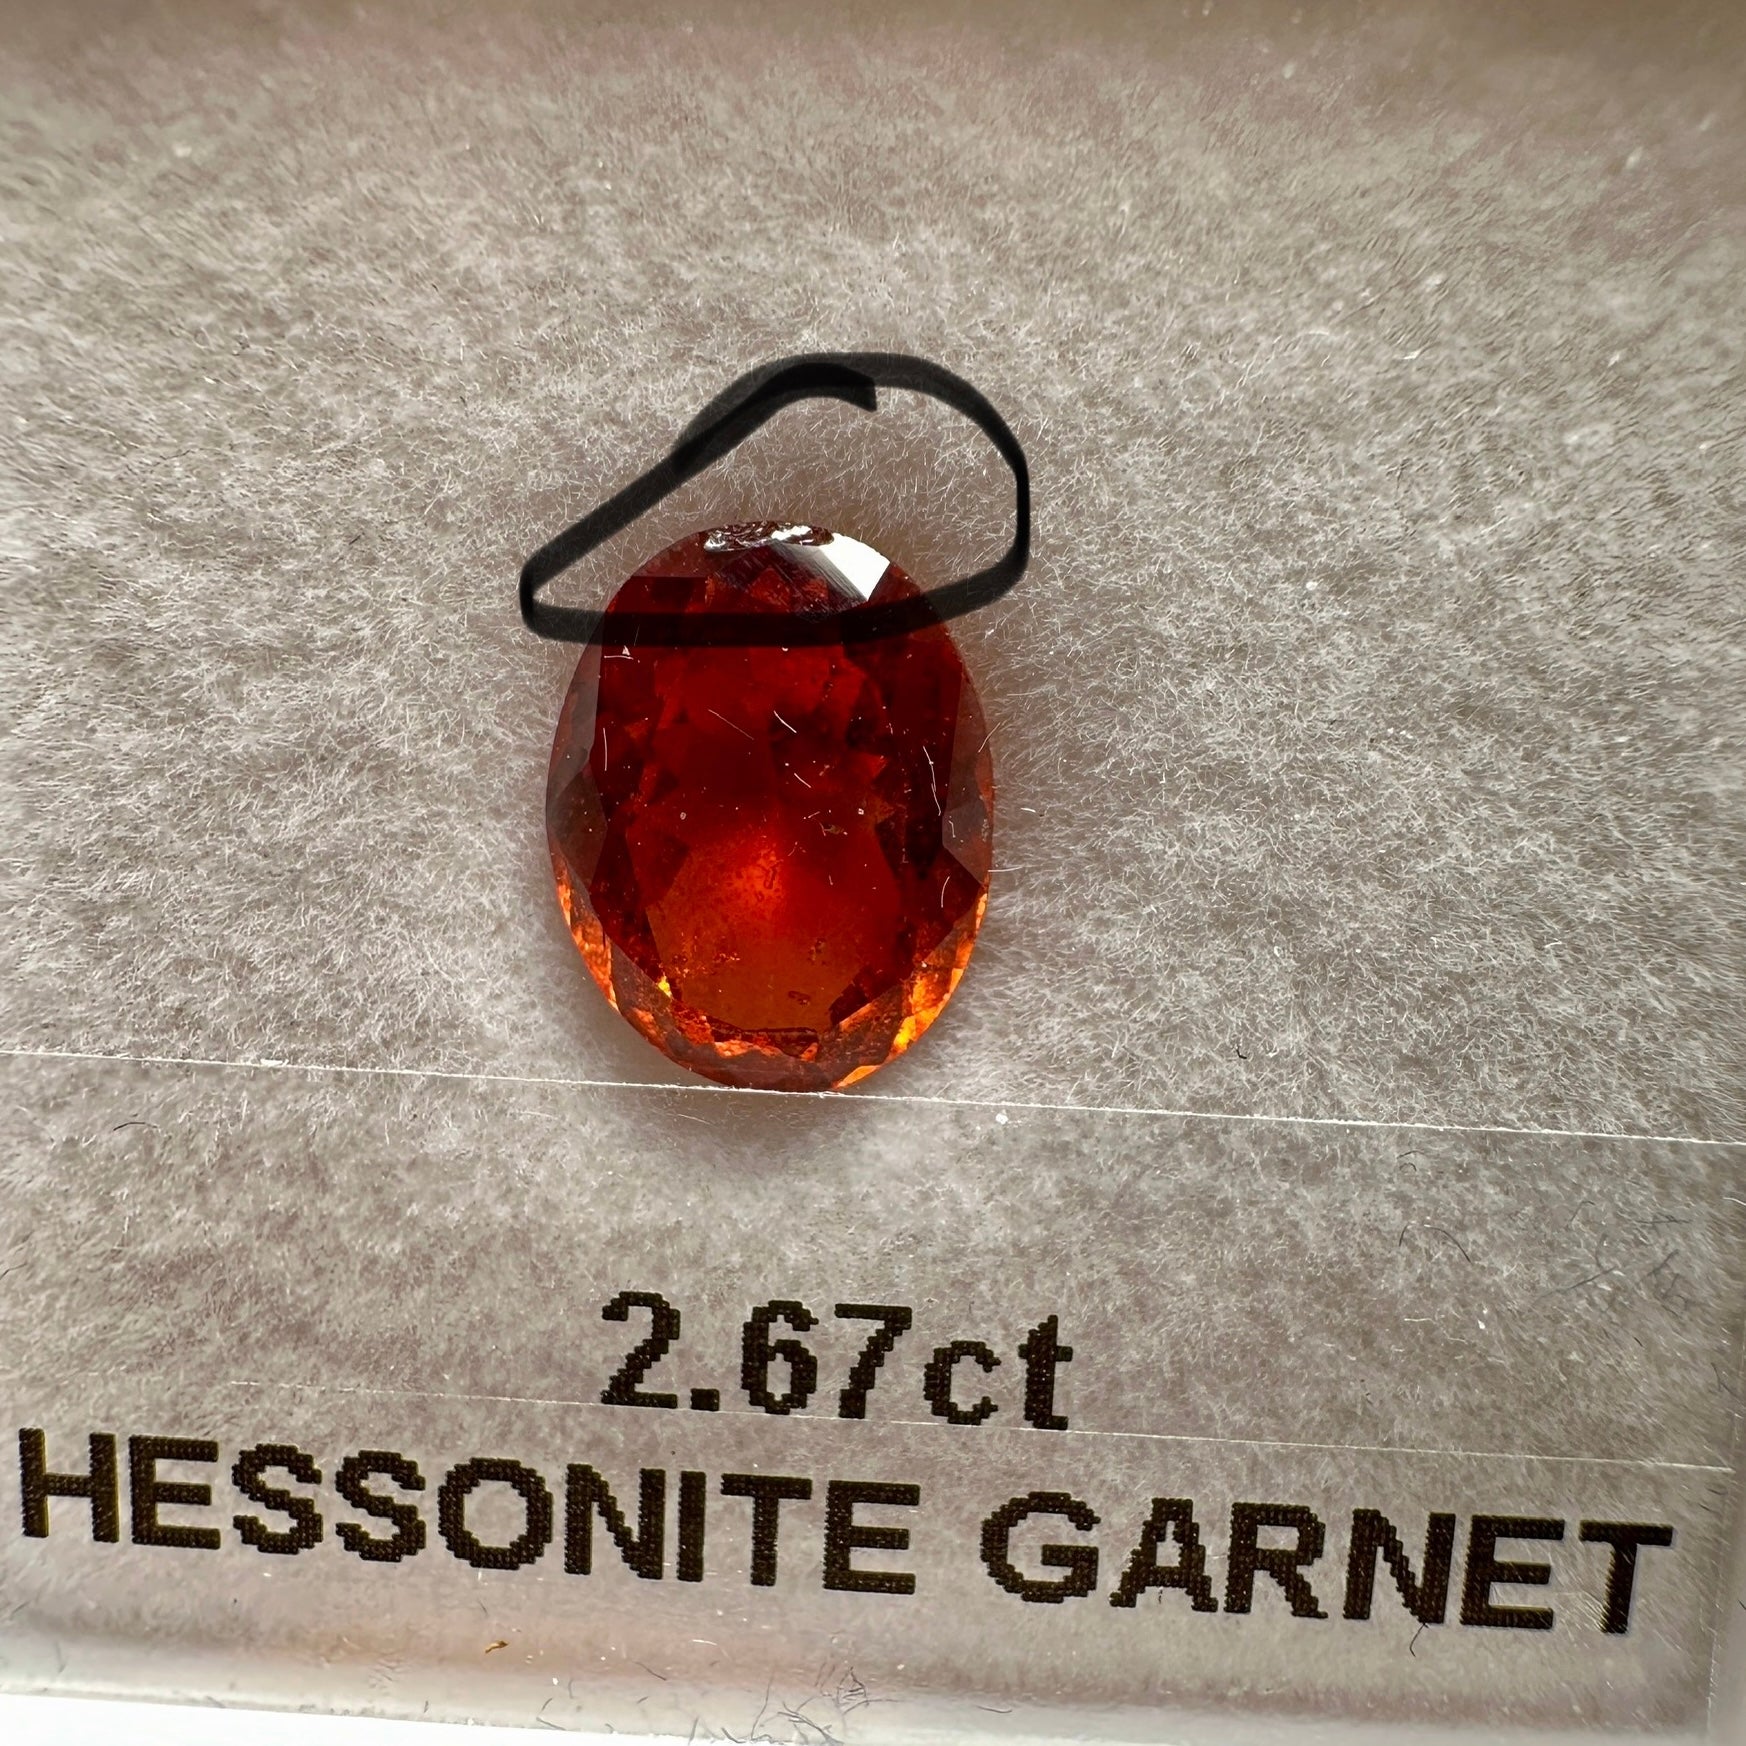 2.67ct Hessonite Garnet, Untreated Unheated, native cut